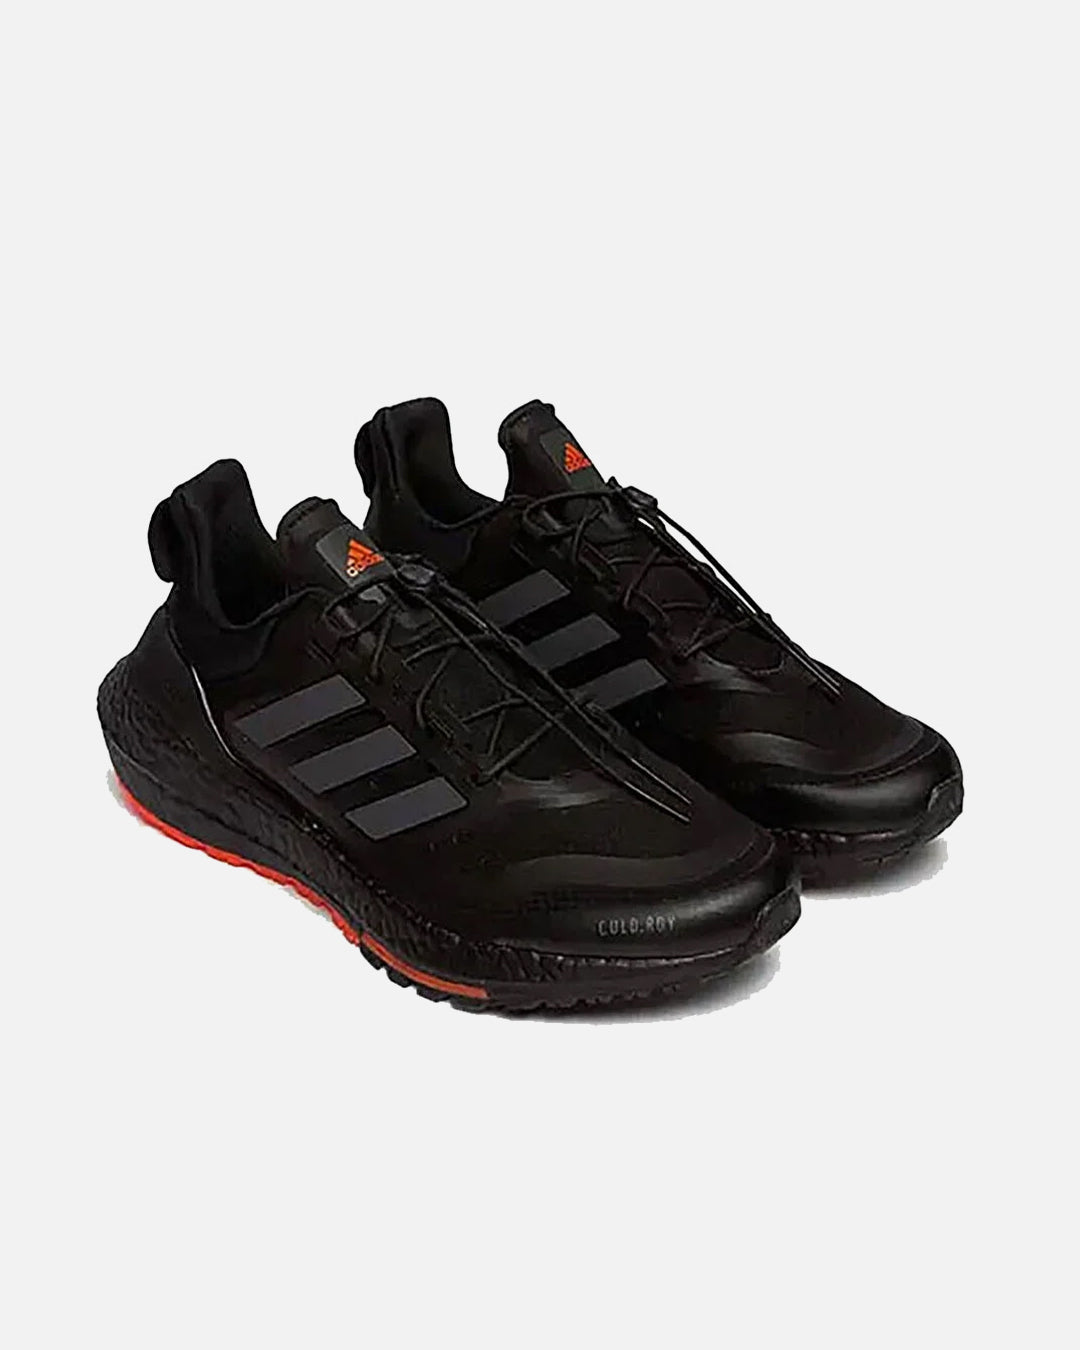 Adidas Ultraboost - Black/Orange